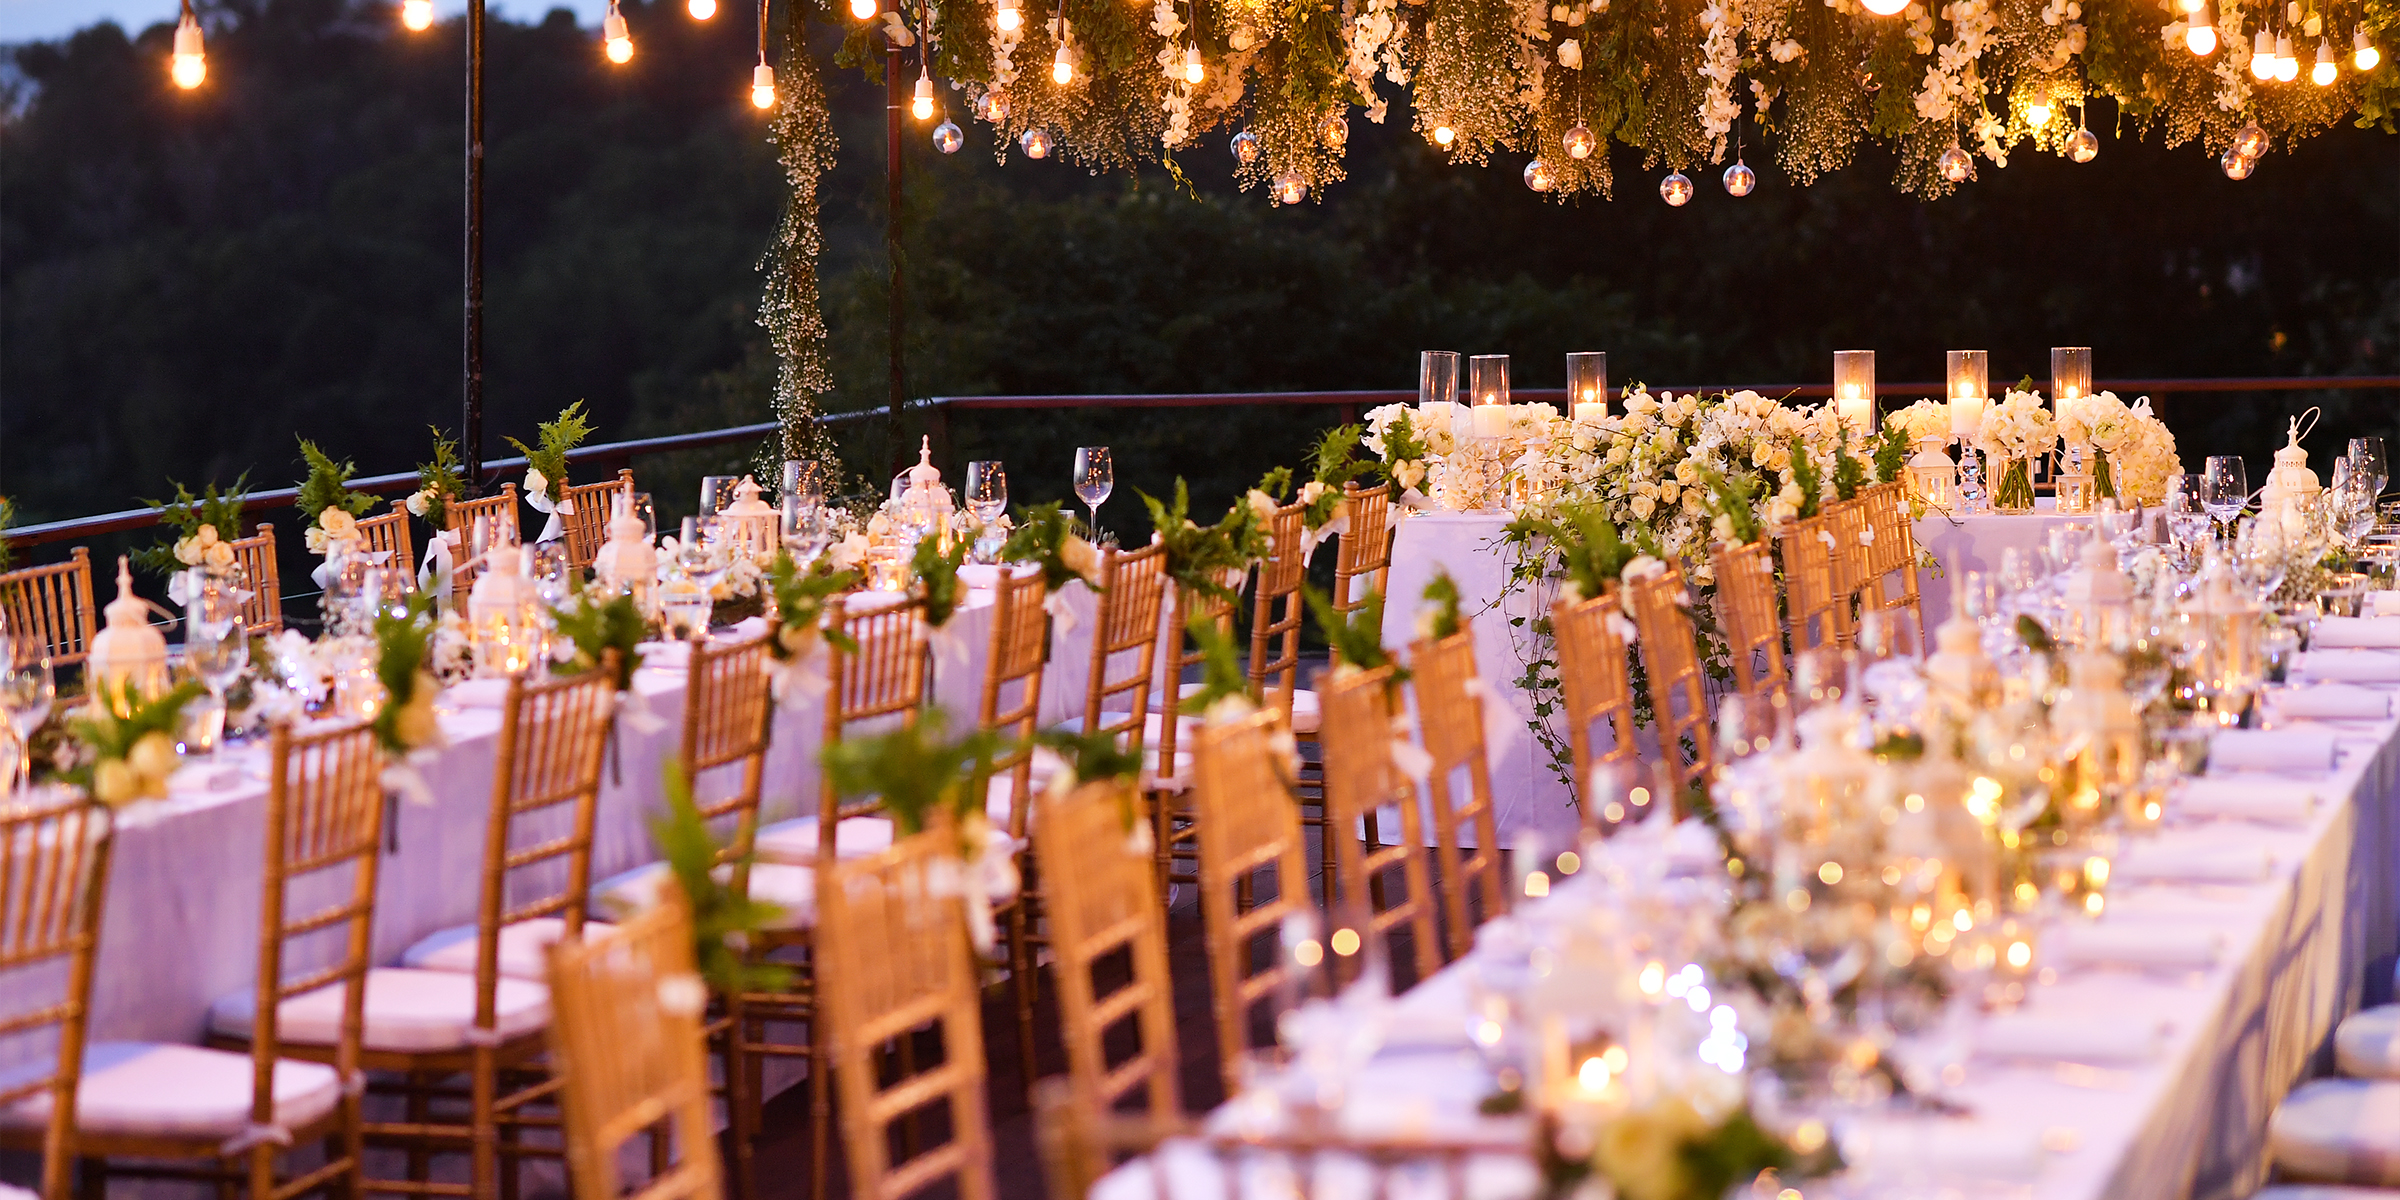 A wedding venue | Source: Shutterstock